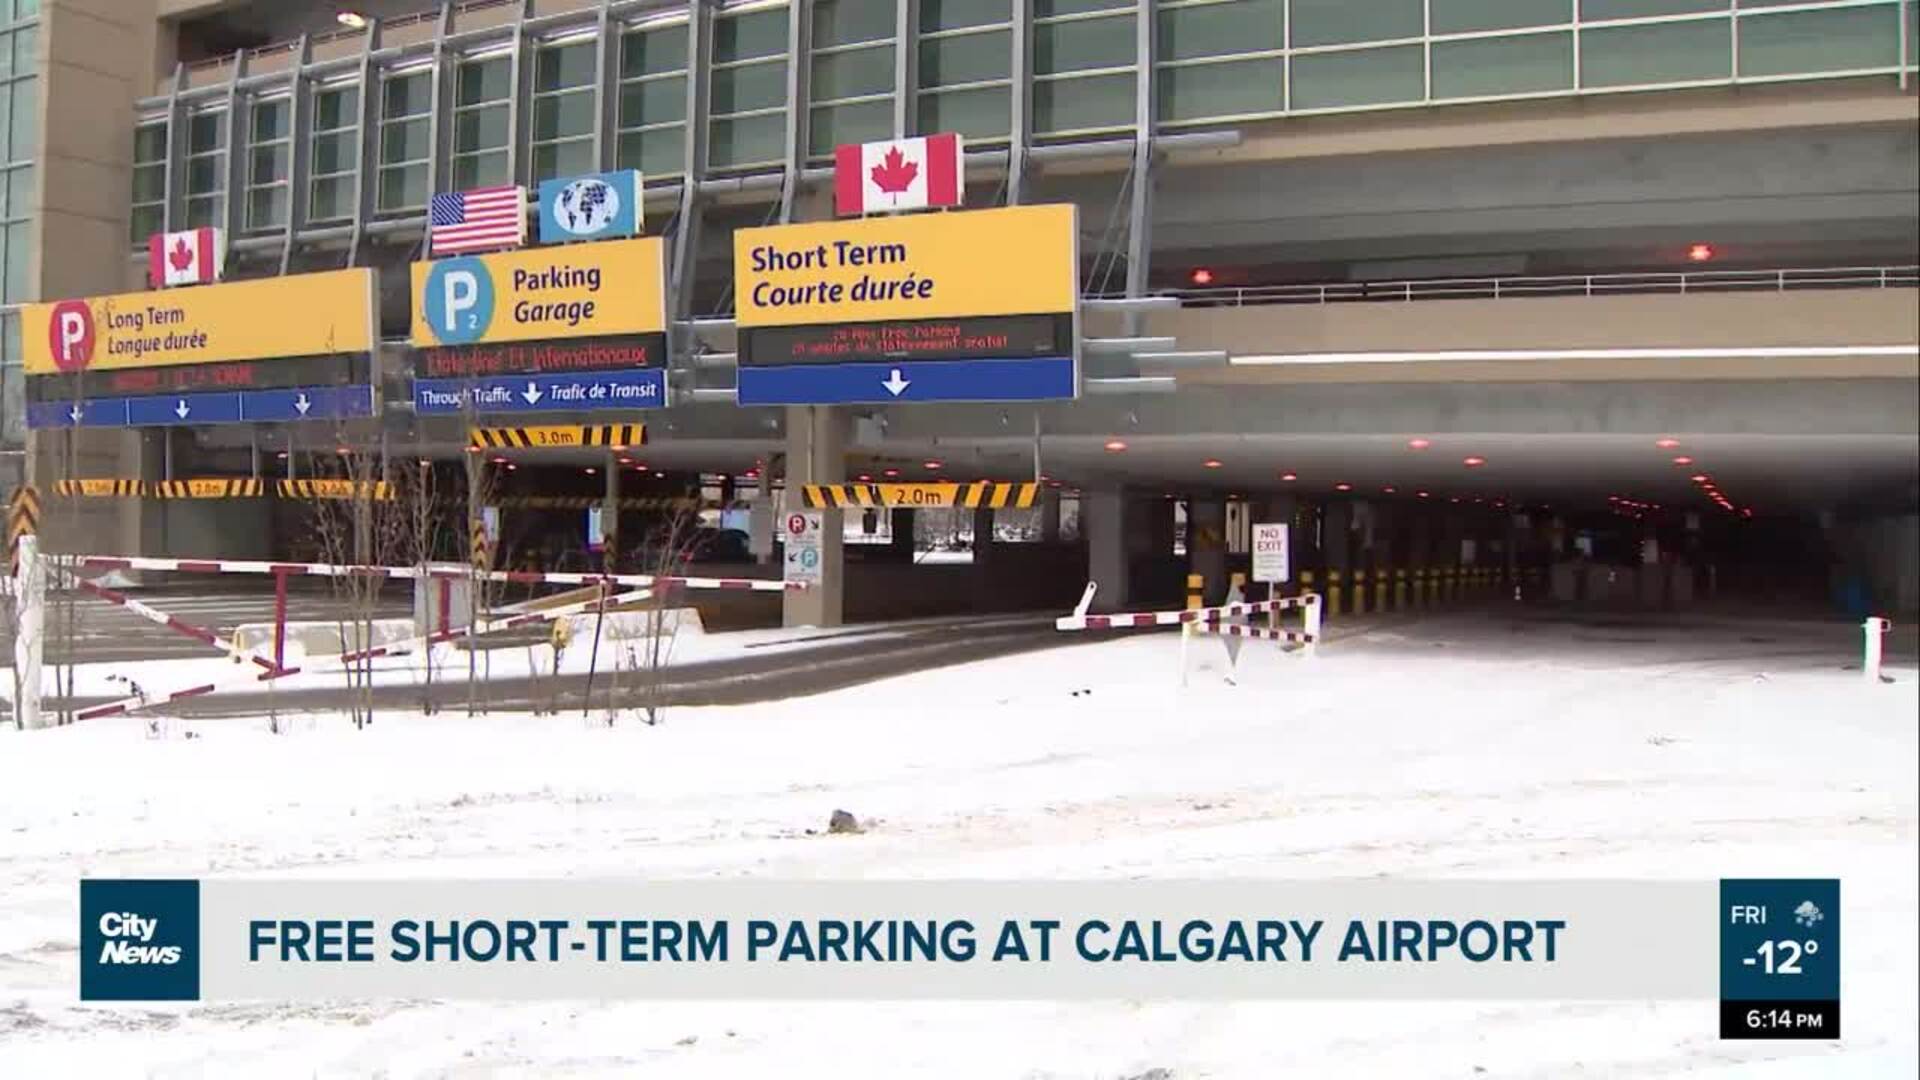 Free short-term parking at Calgary airport